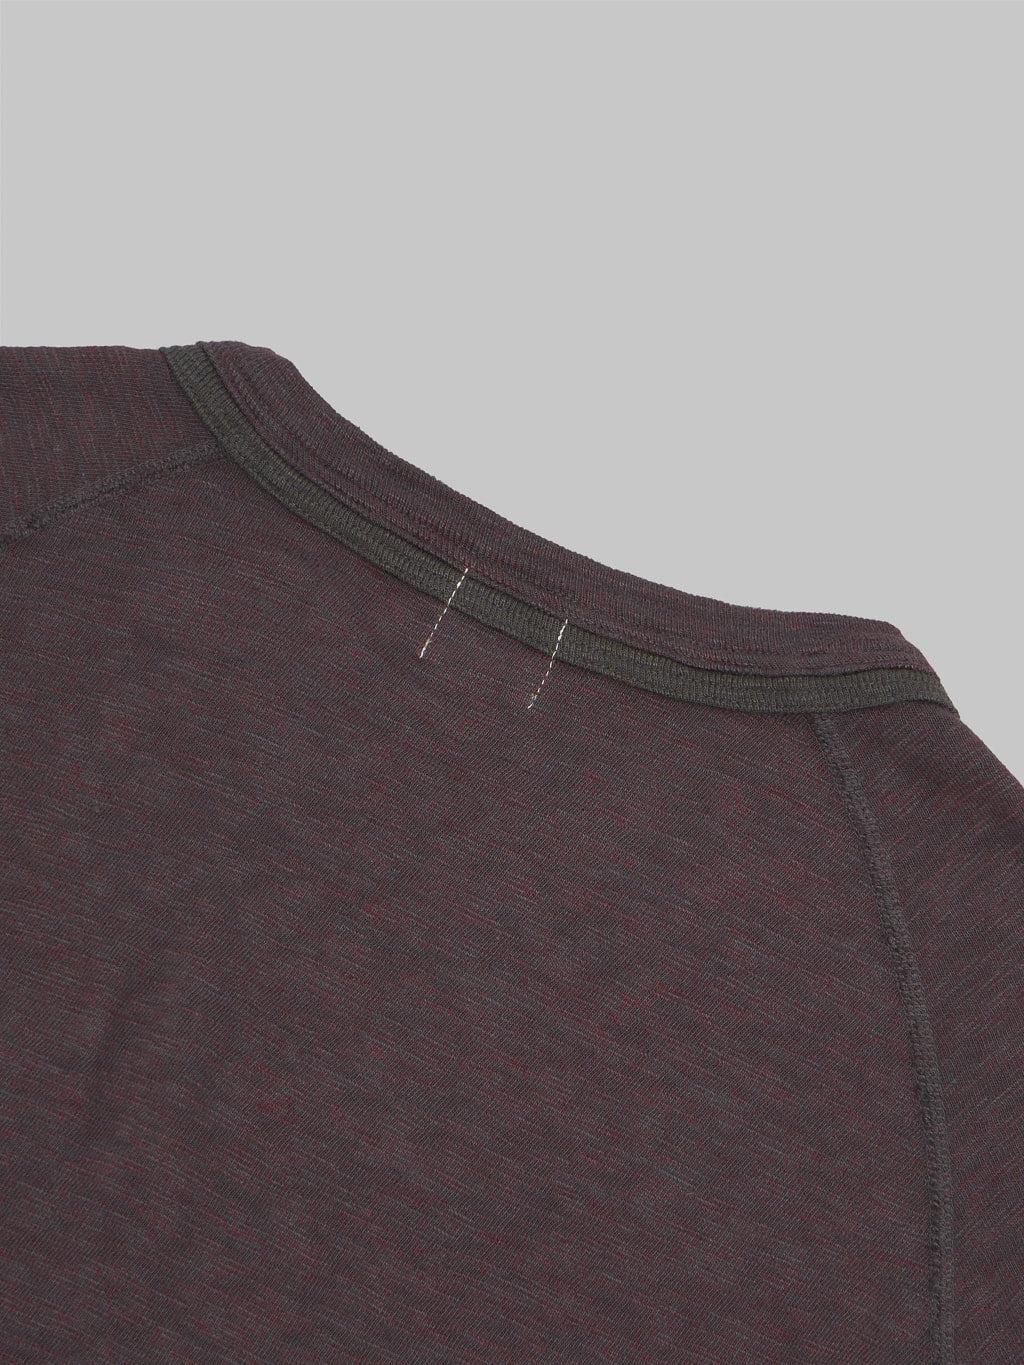 loop and weft double binder neck heather slub knit tshirt black stitching